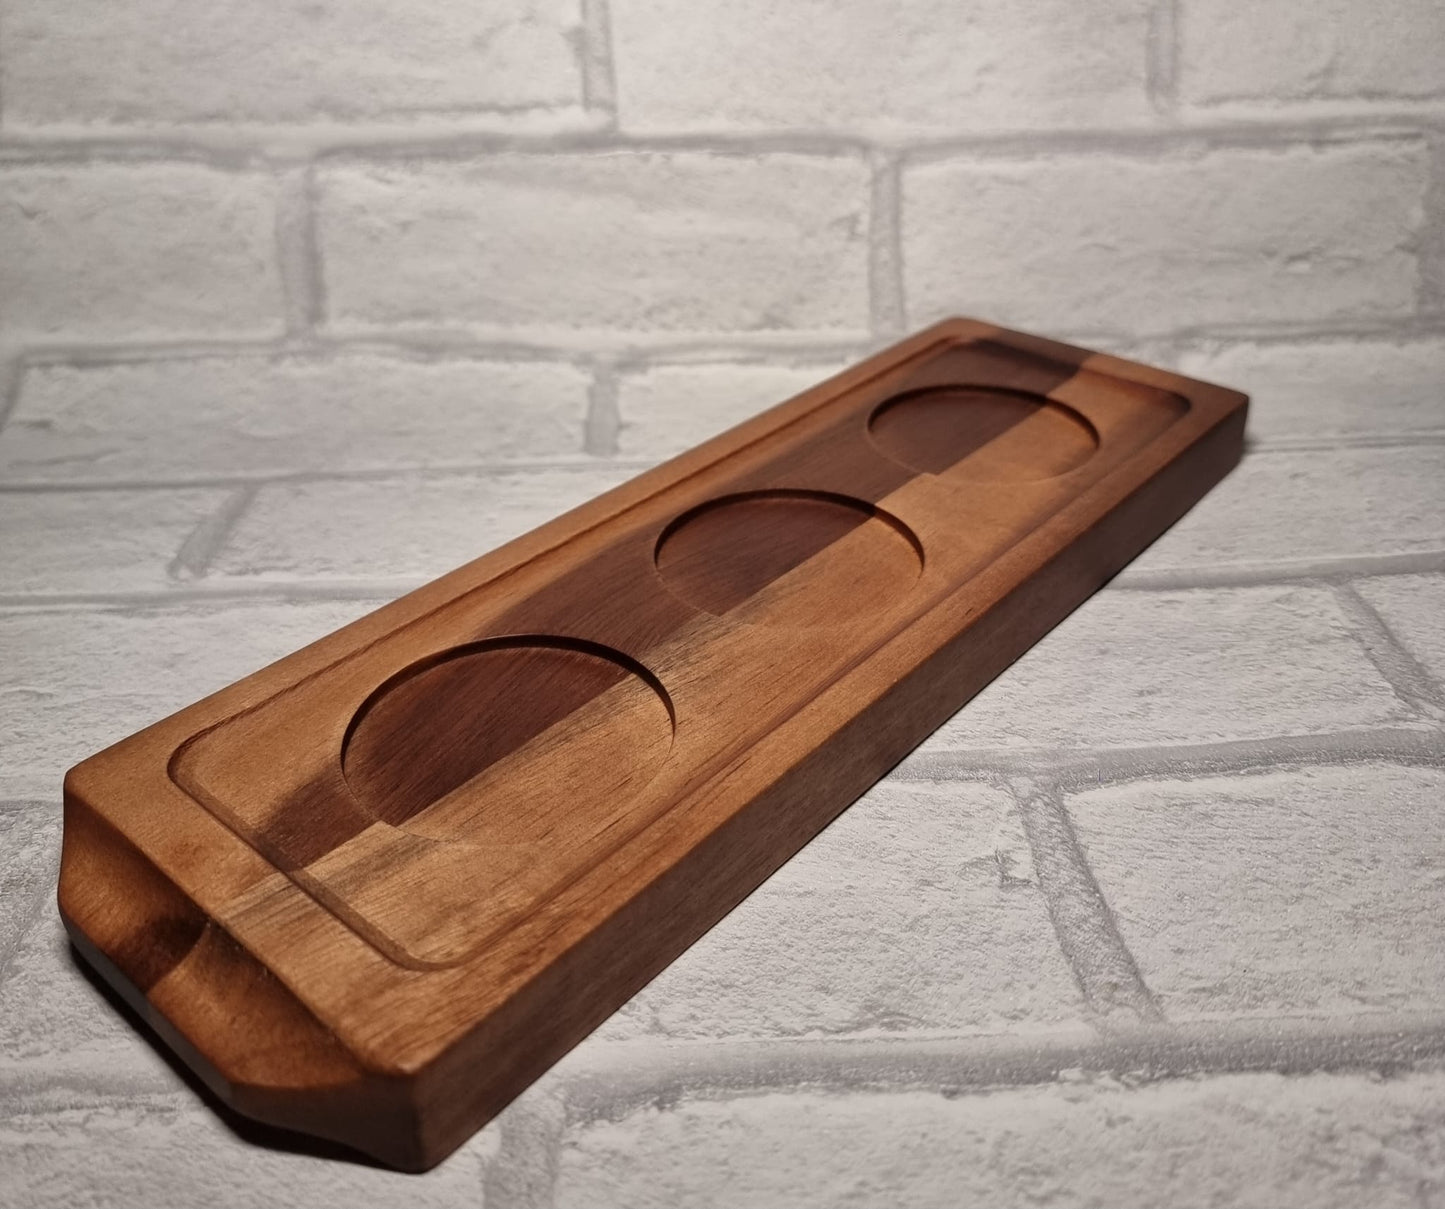 Personalised / Bespoke Half Pint Tasting Glassware with Wooden Flight Paddle Board